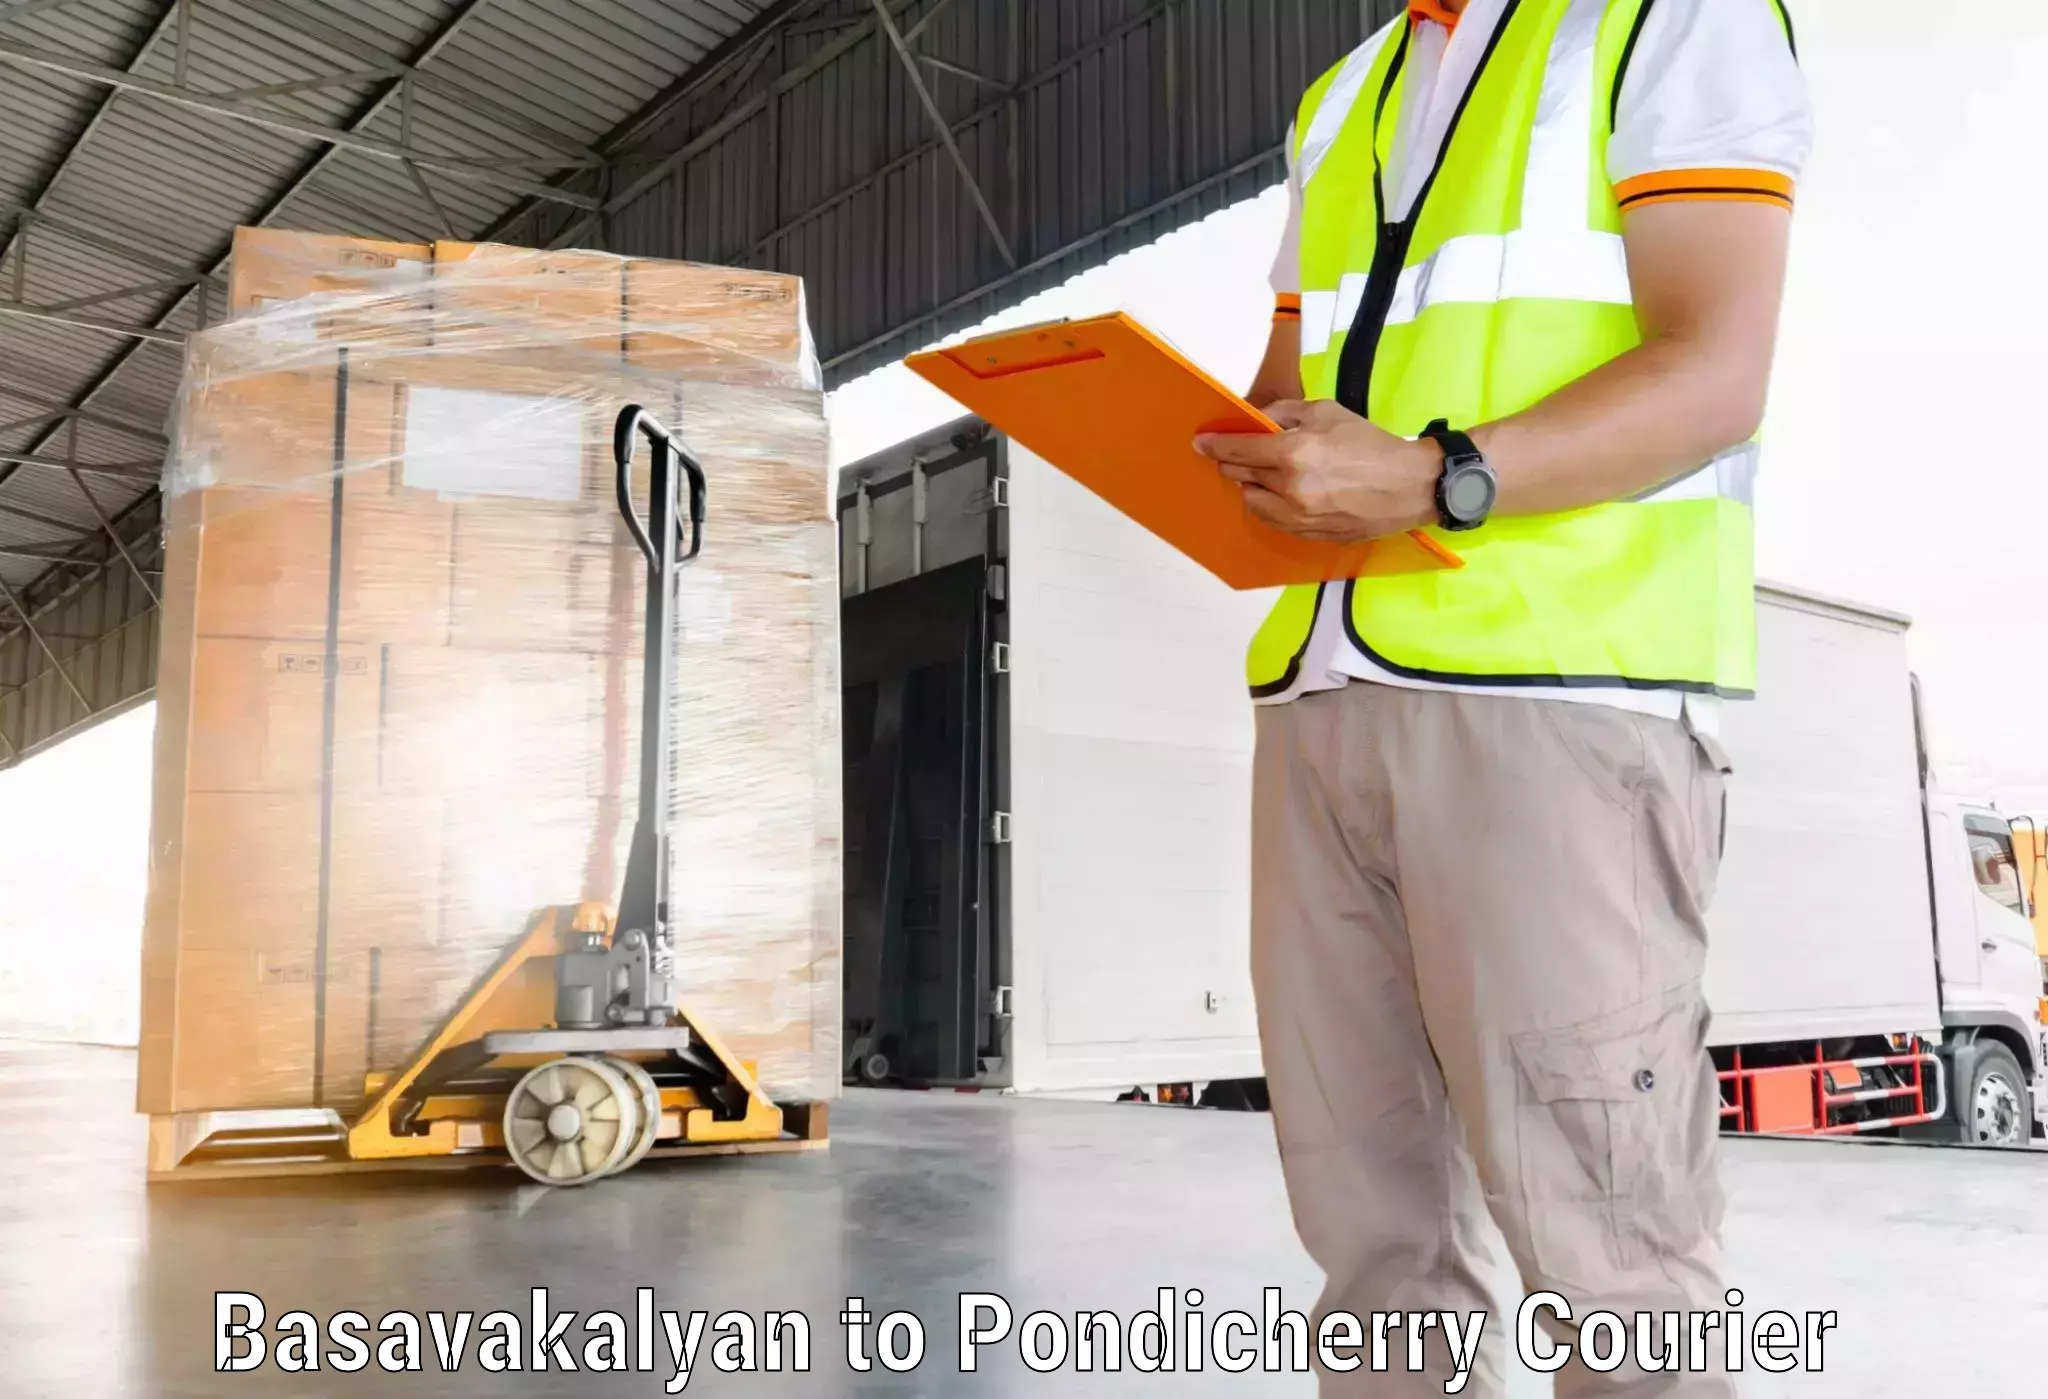 Modern courier technology Basavakalyan to Pondicherry University